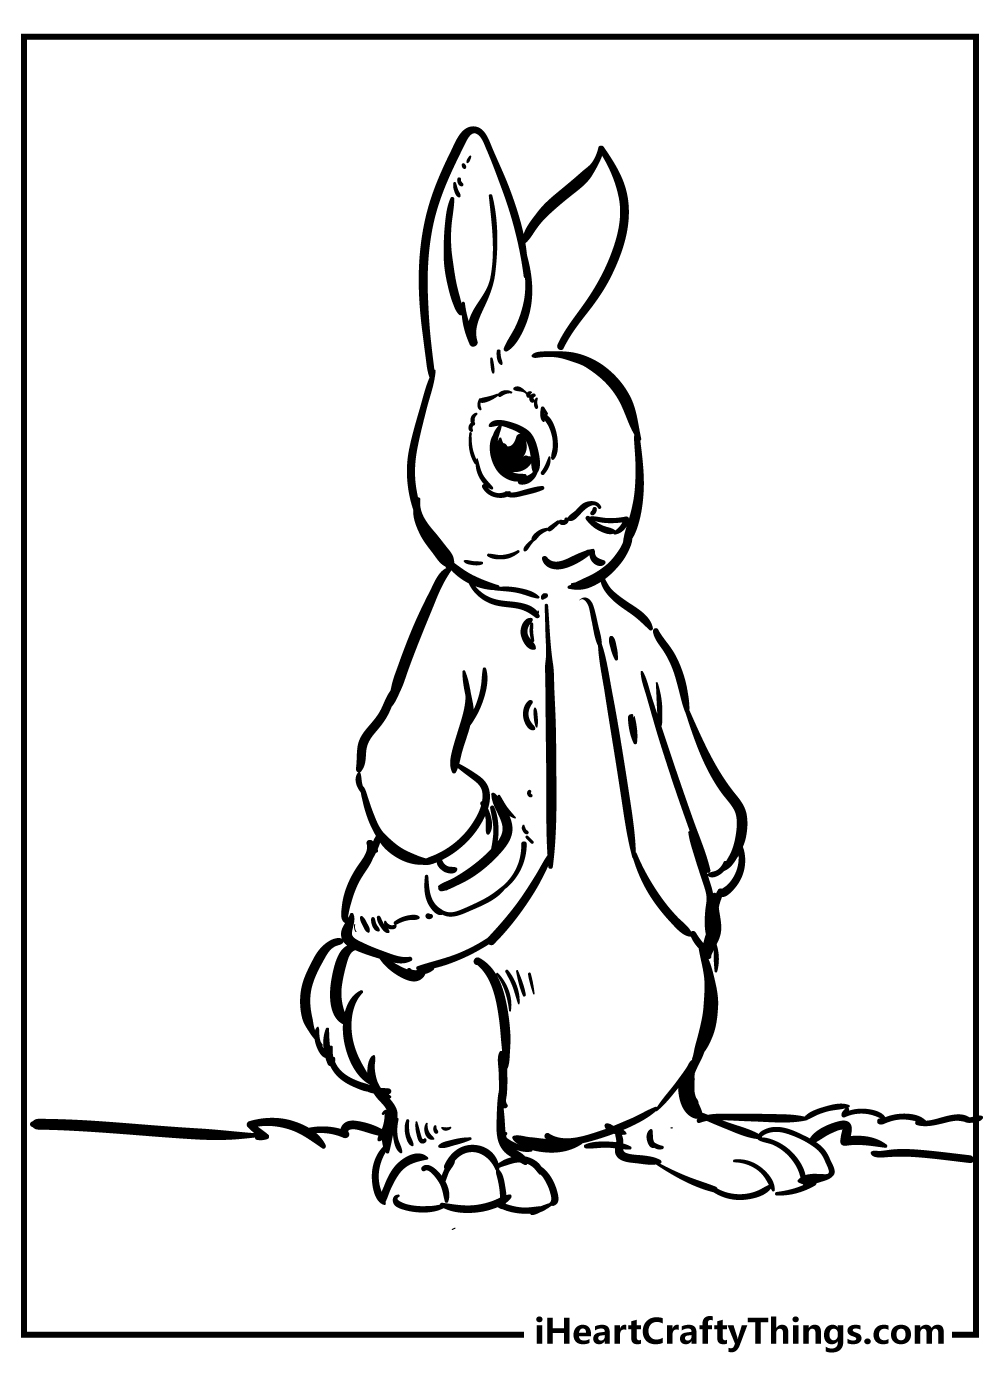 Peter Rabbit Coloring Book for kids free printable